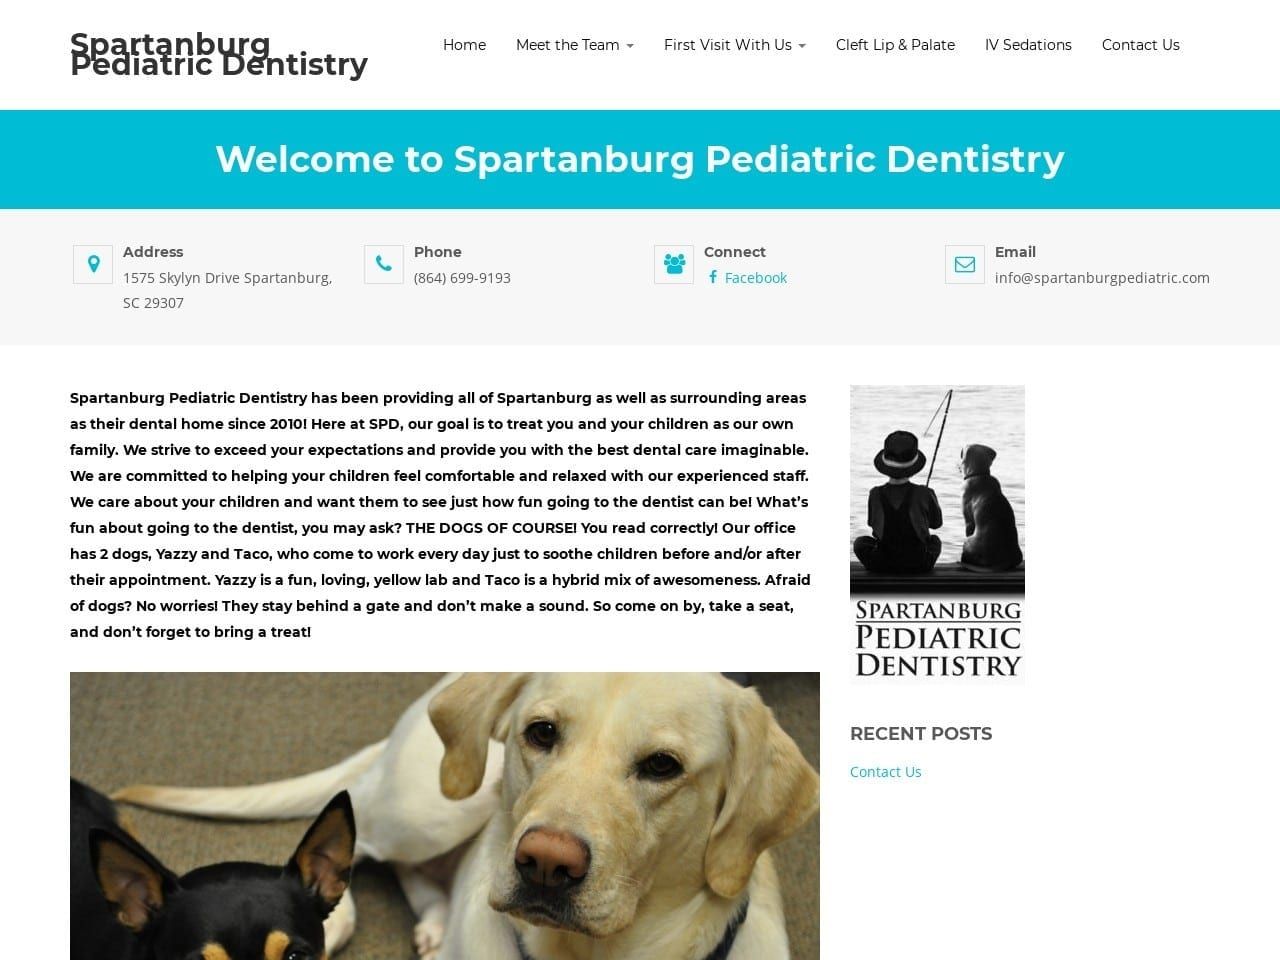 Spartanburg Pediatric Dentistry Website Screenshot from spartanburgpediatric.com